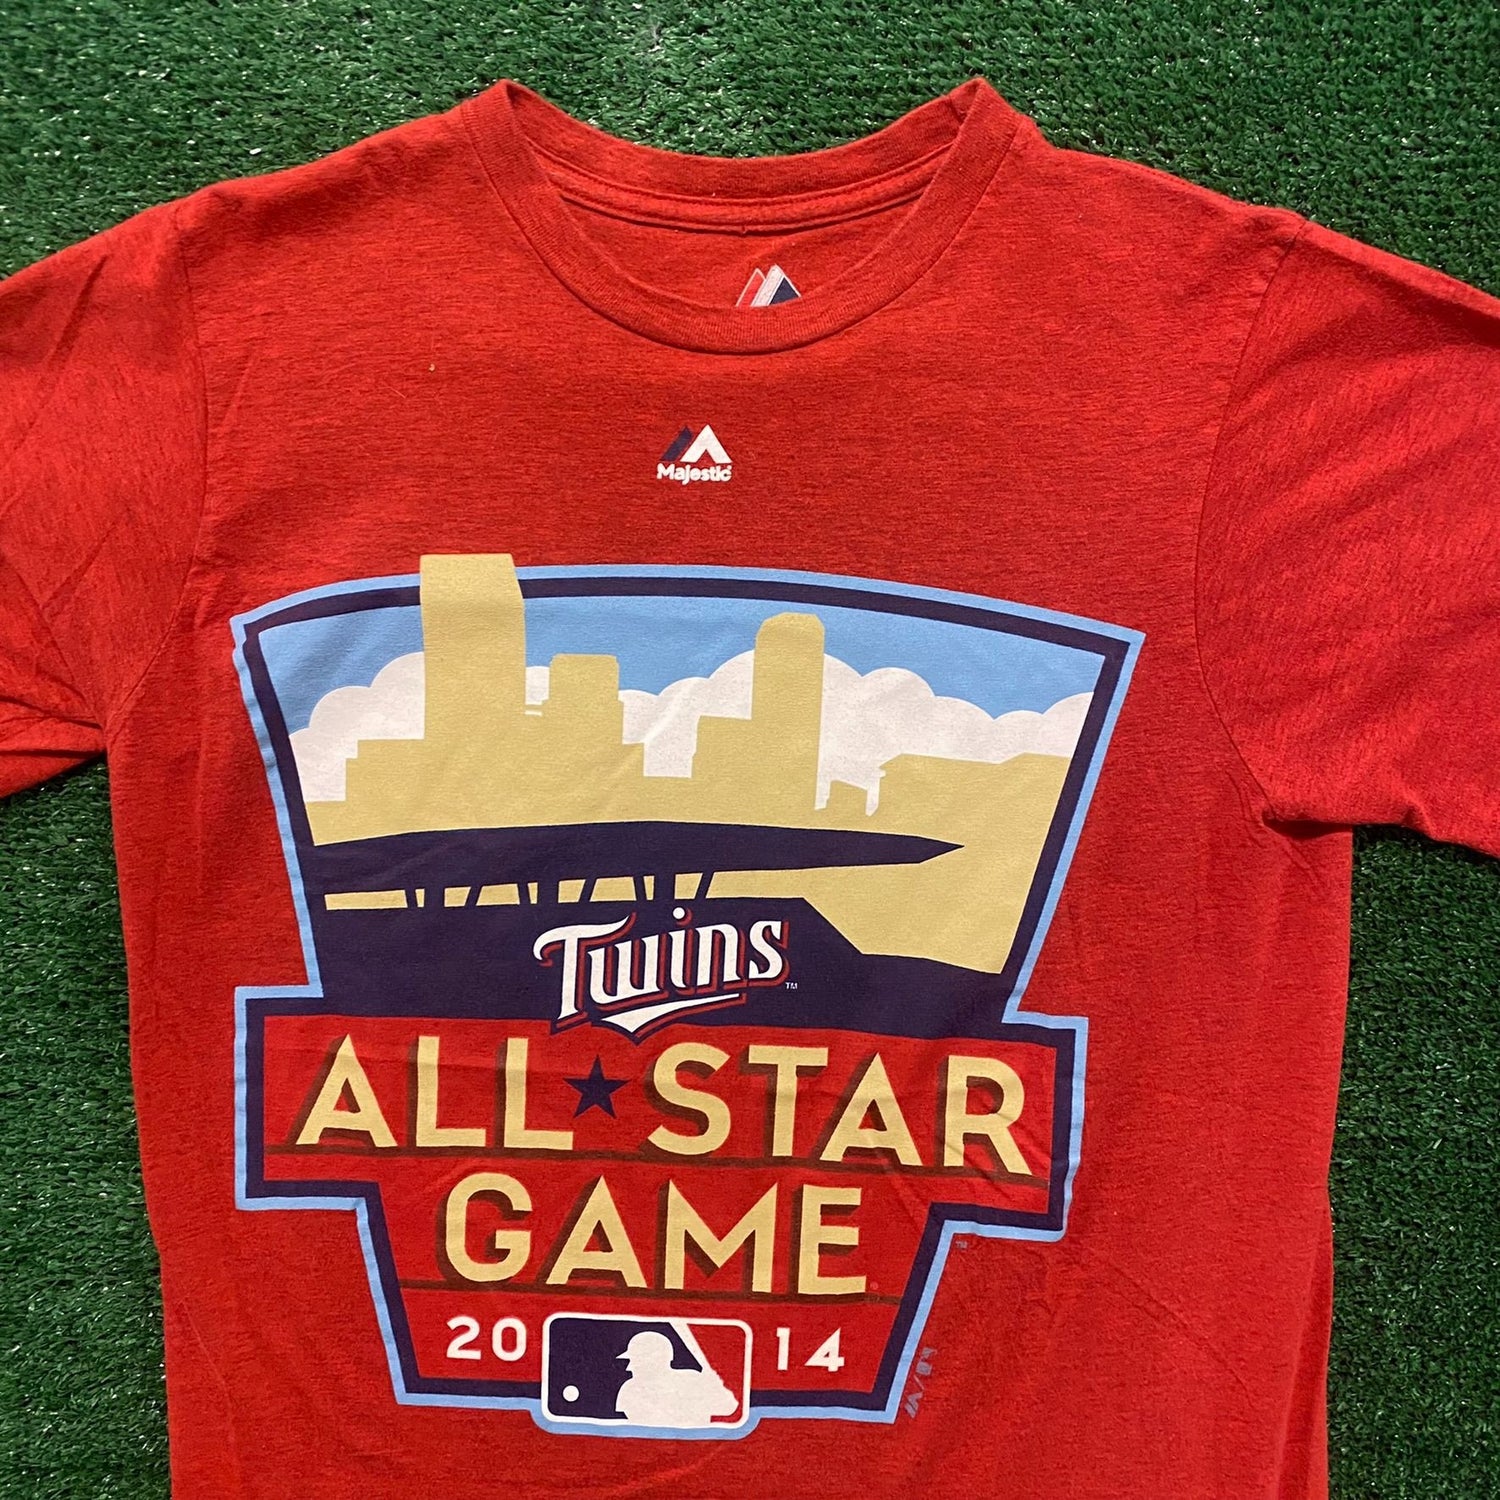 All-Star Game Minnesota Twins MLB Jerseys for sale